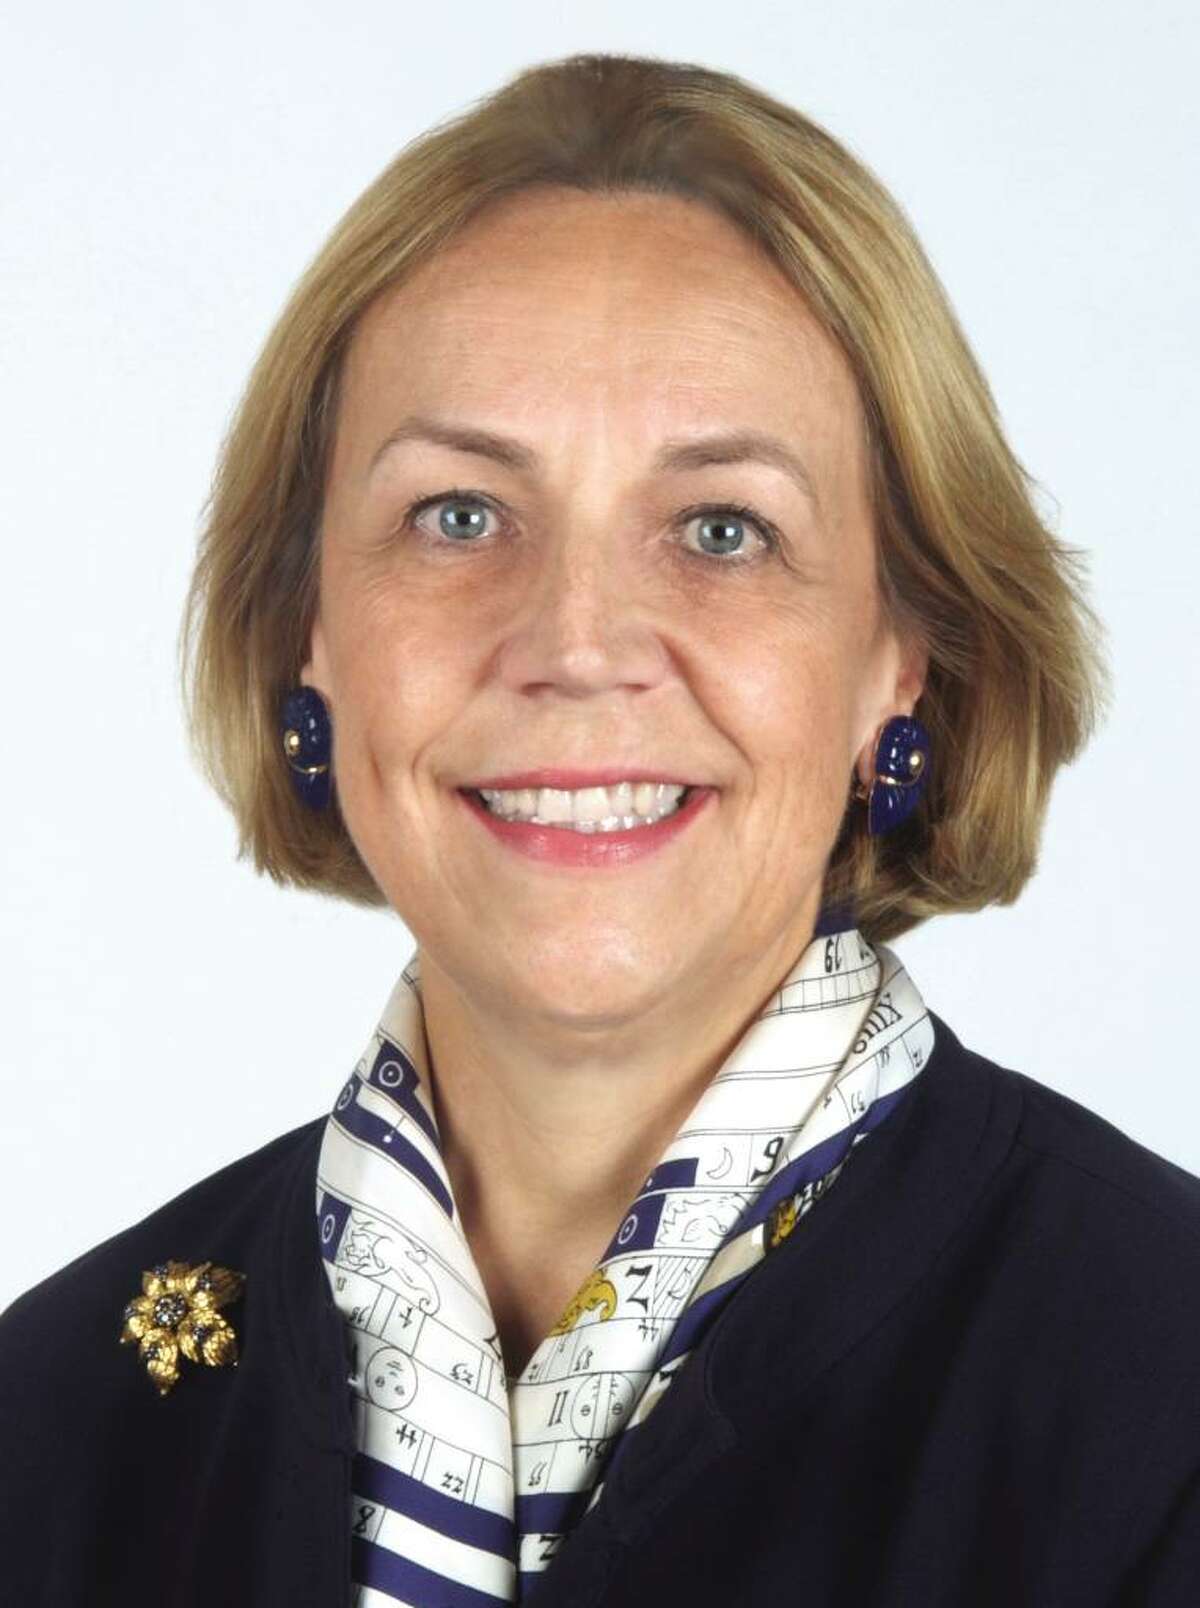 Laure Aubuchon, The City of Stamford's new Director of Economic Development.